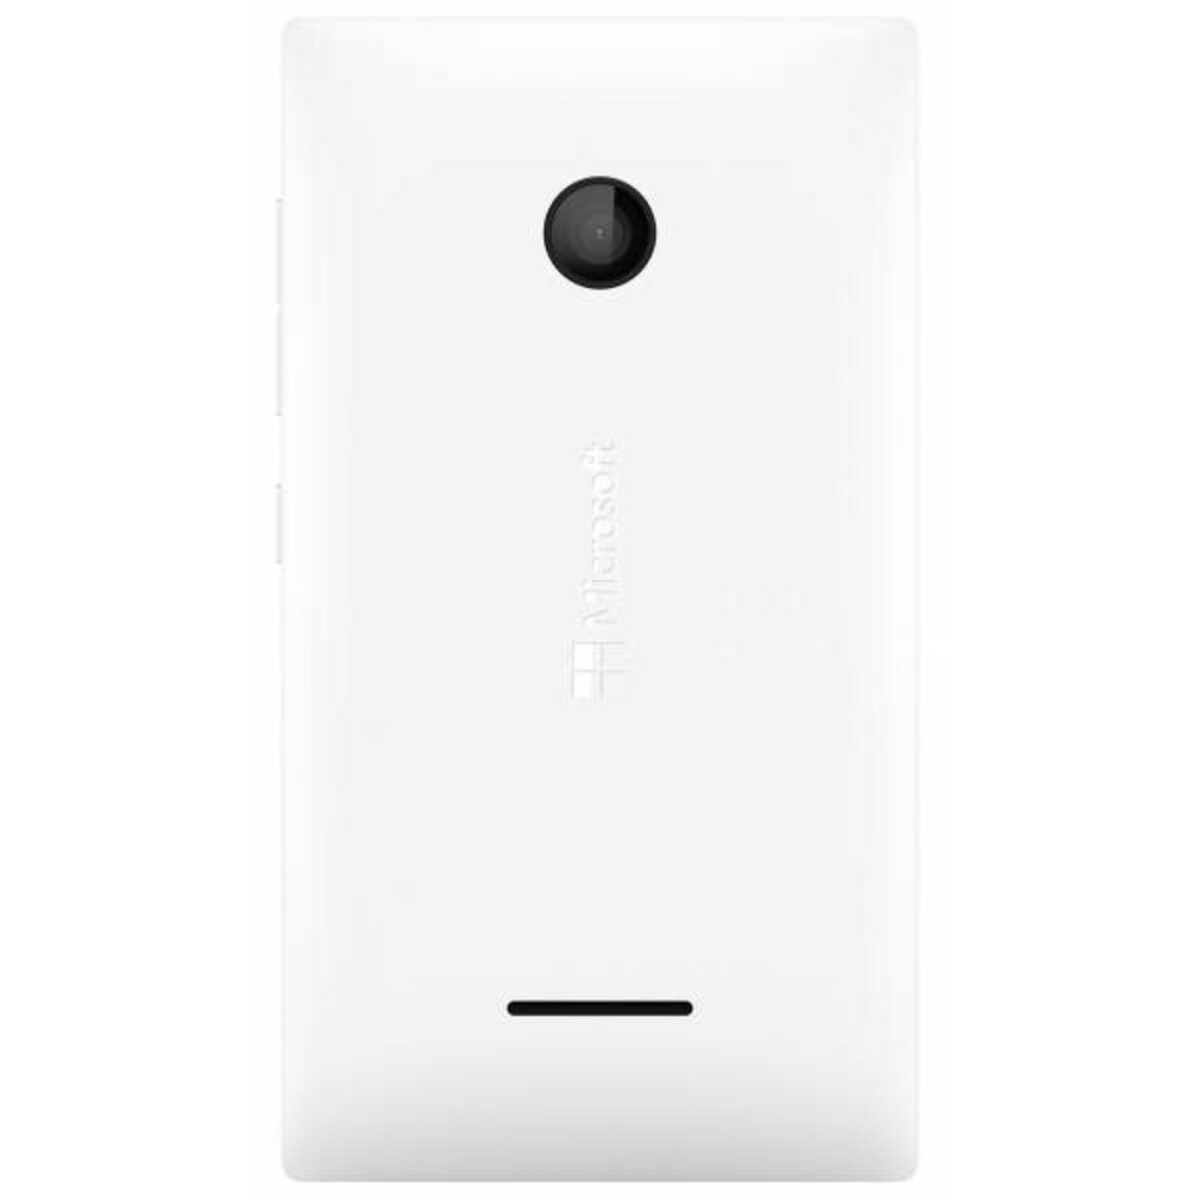 MICROSOFT Smartphone - Lumia 435 - Blanc - Double SIM